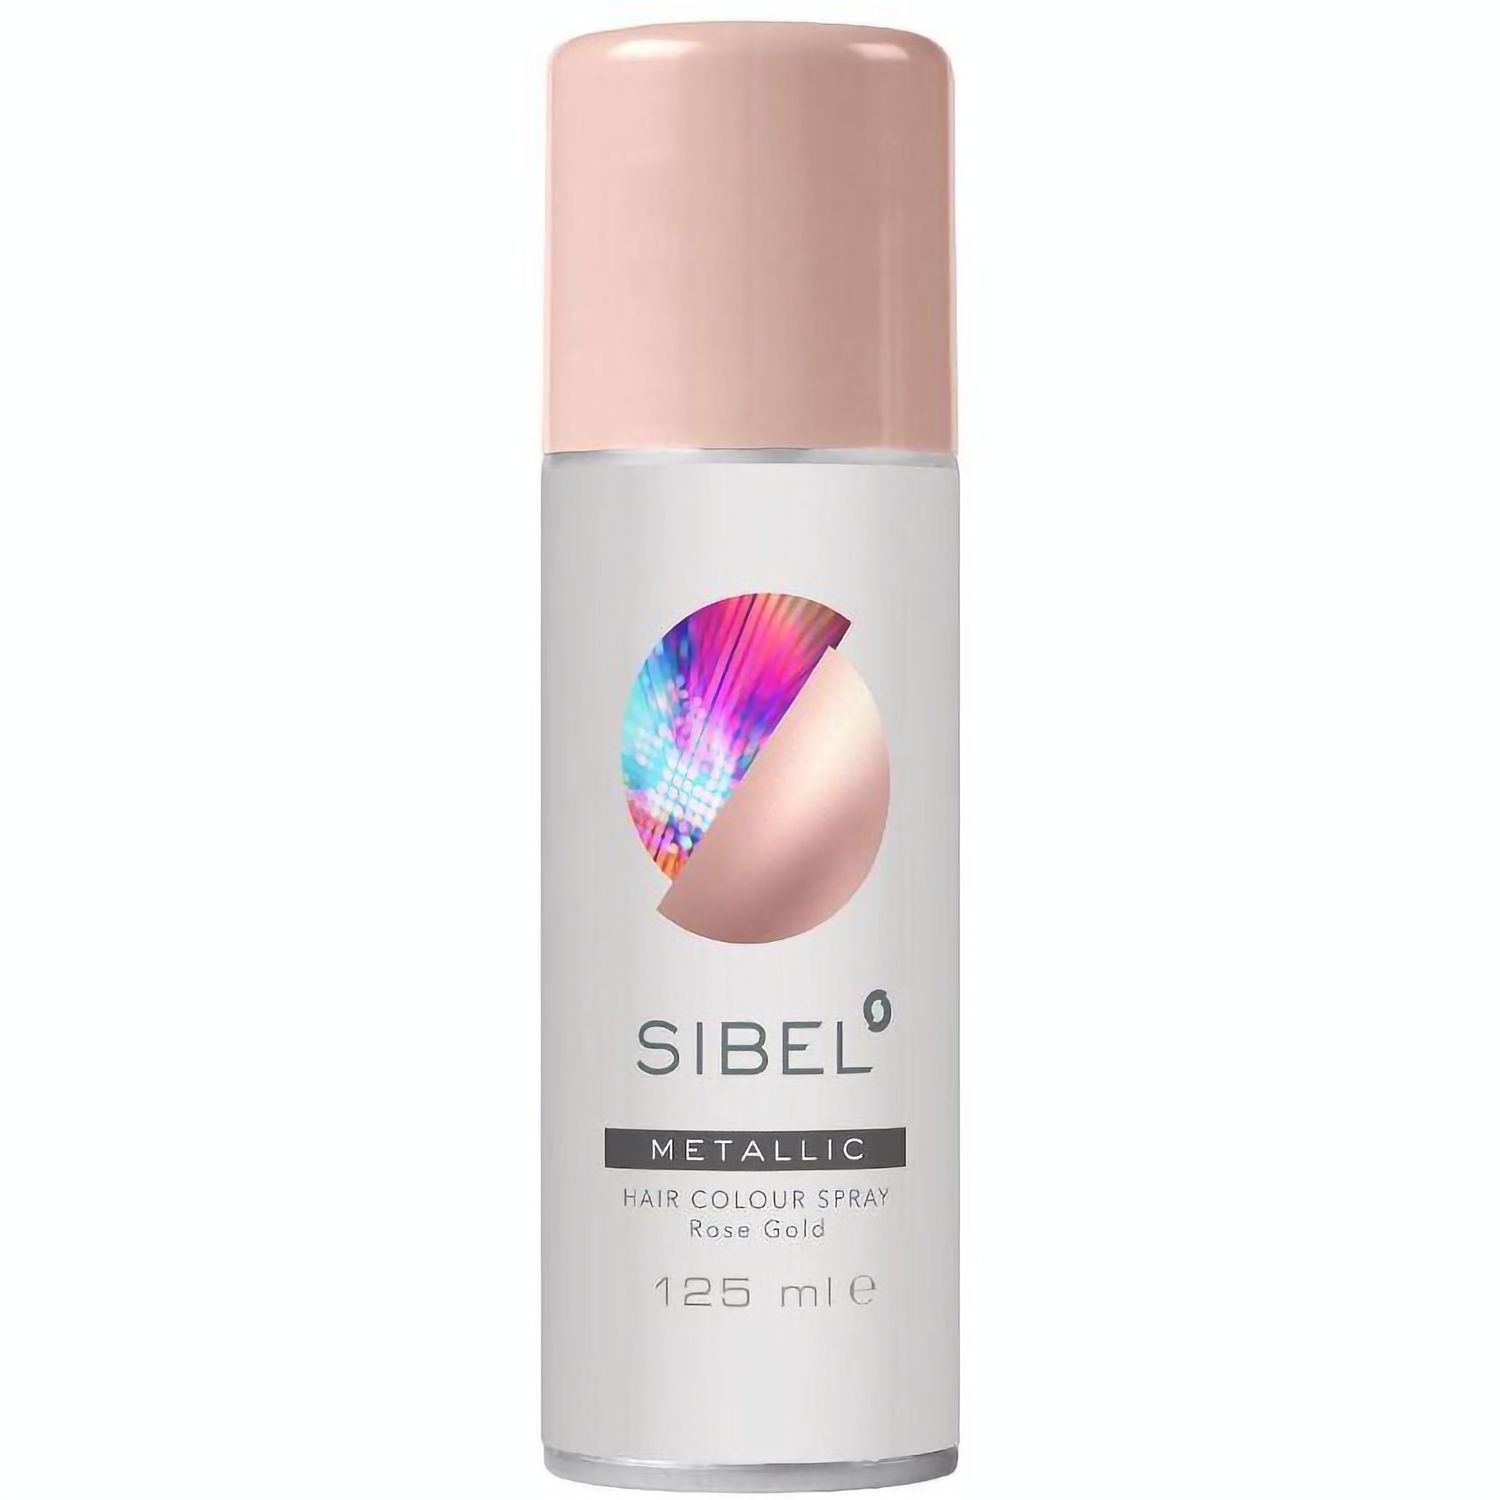 Спрей-краска для волос Sibel Metallic Hair Colour Spray, розовое золото, 125 мл - фото 1